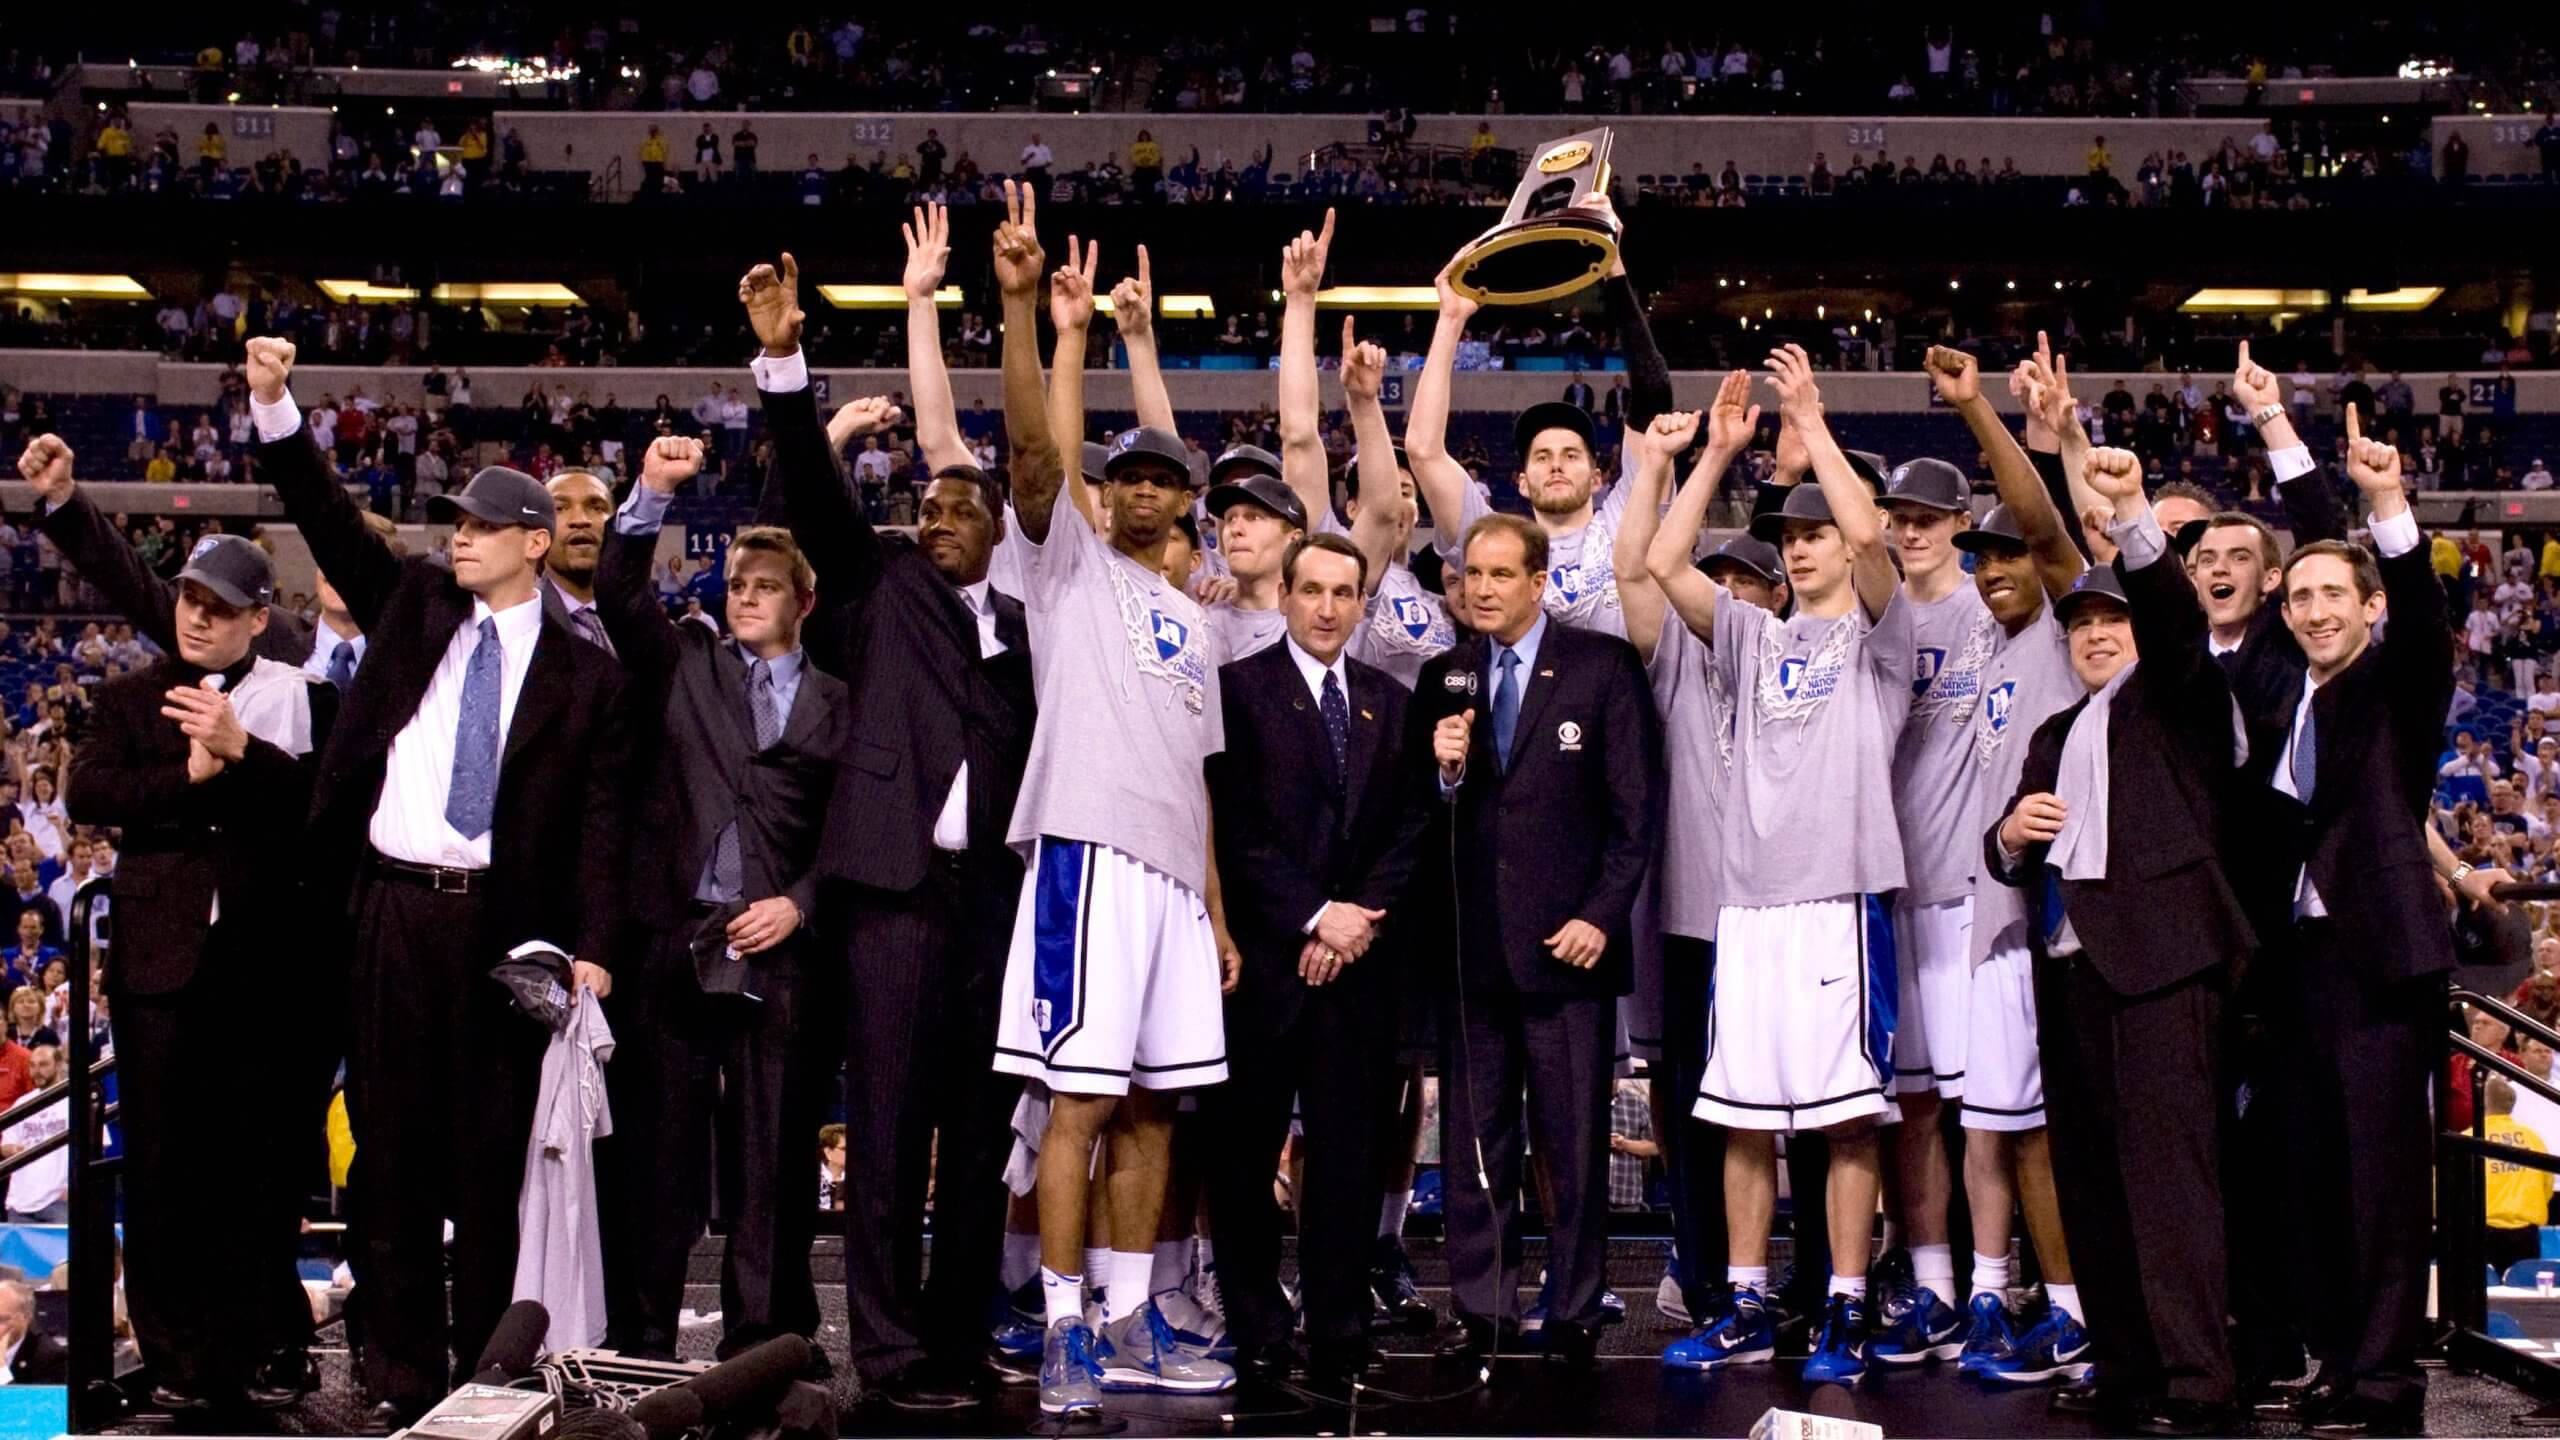 2010: Duke wins its fourth NCAA championship in men’s basketball